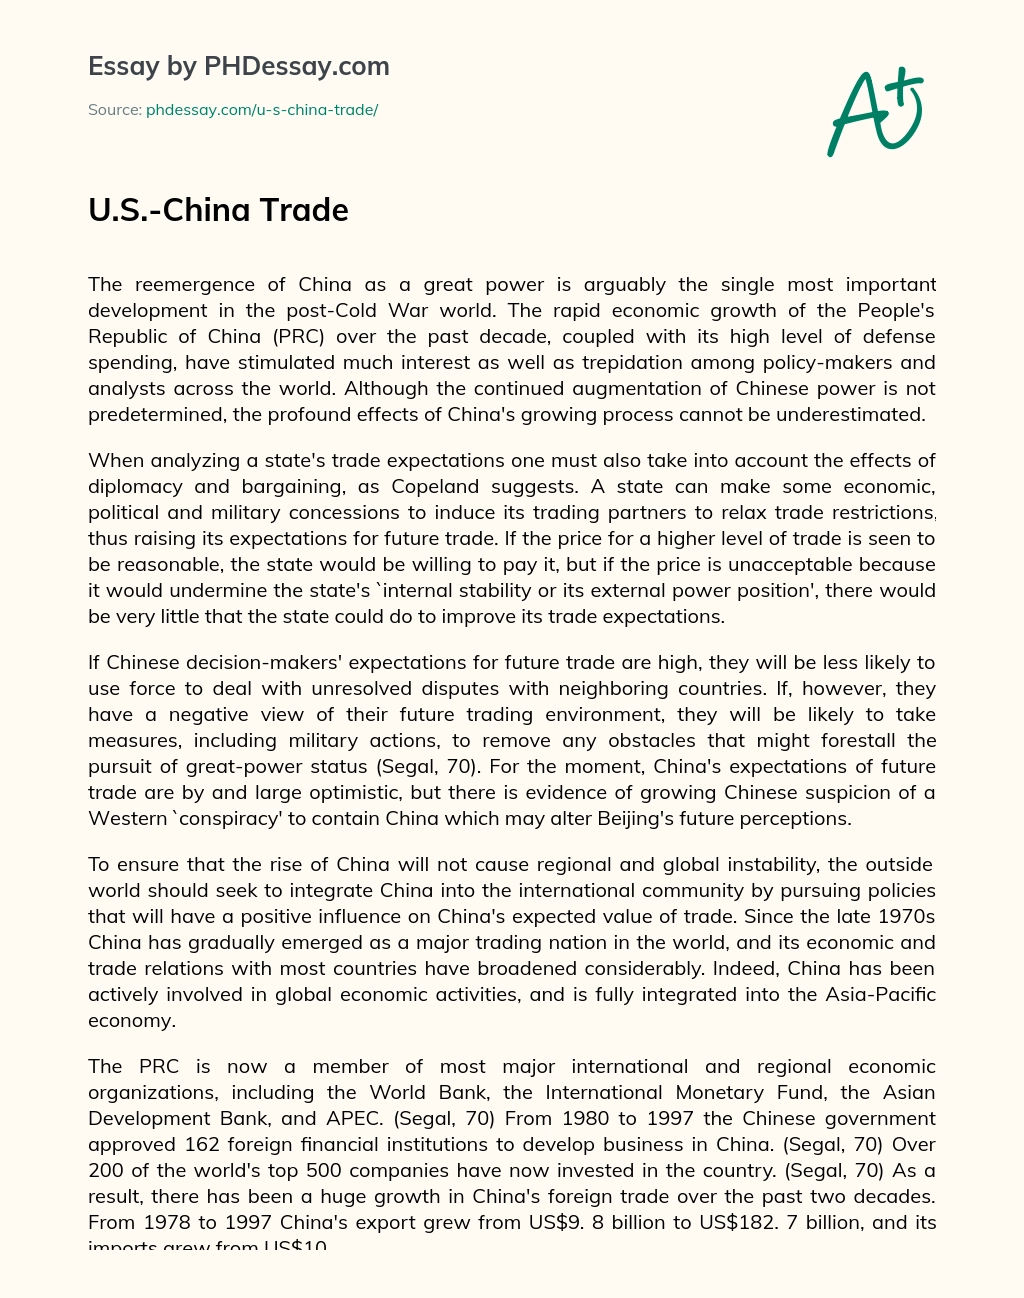 U.S.-China Trade essay